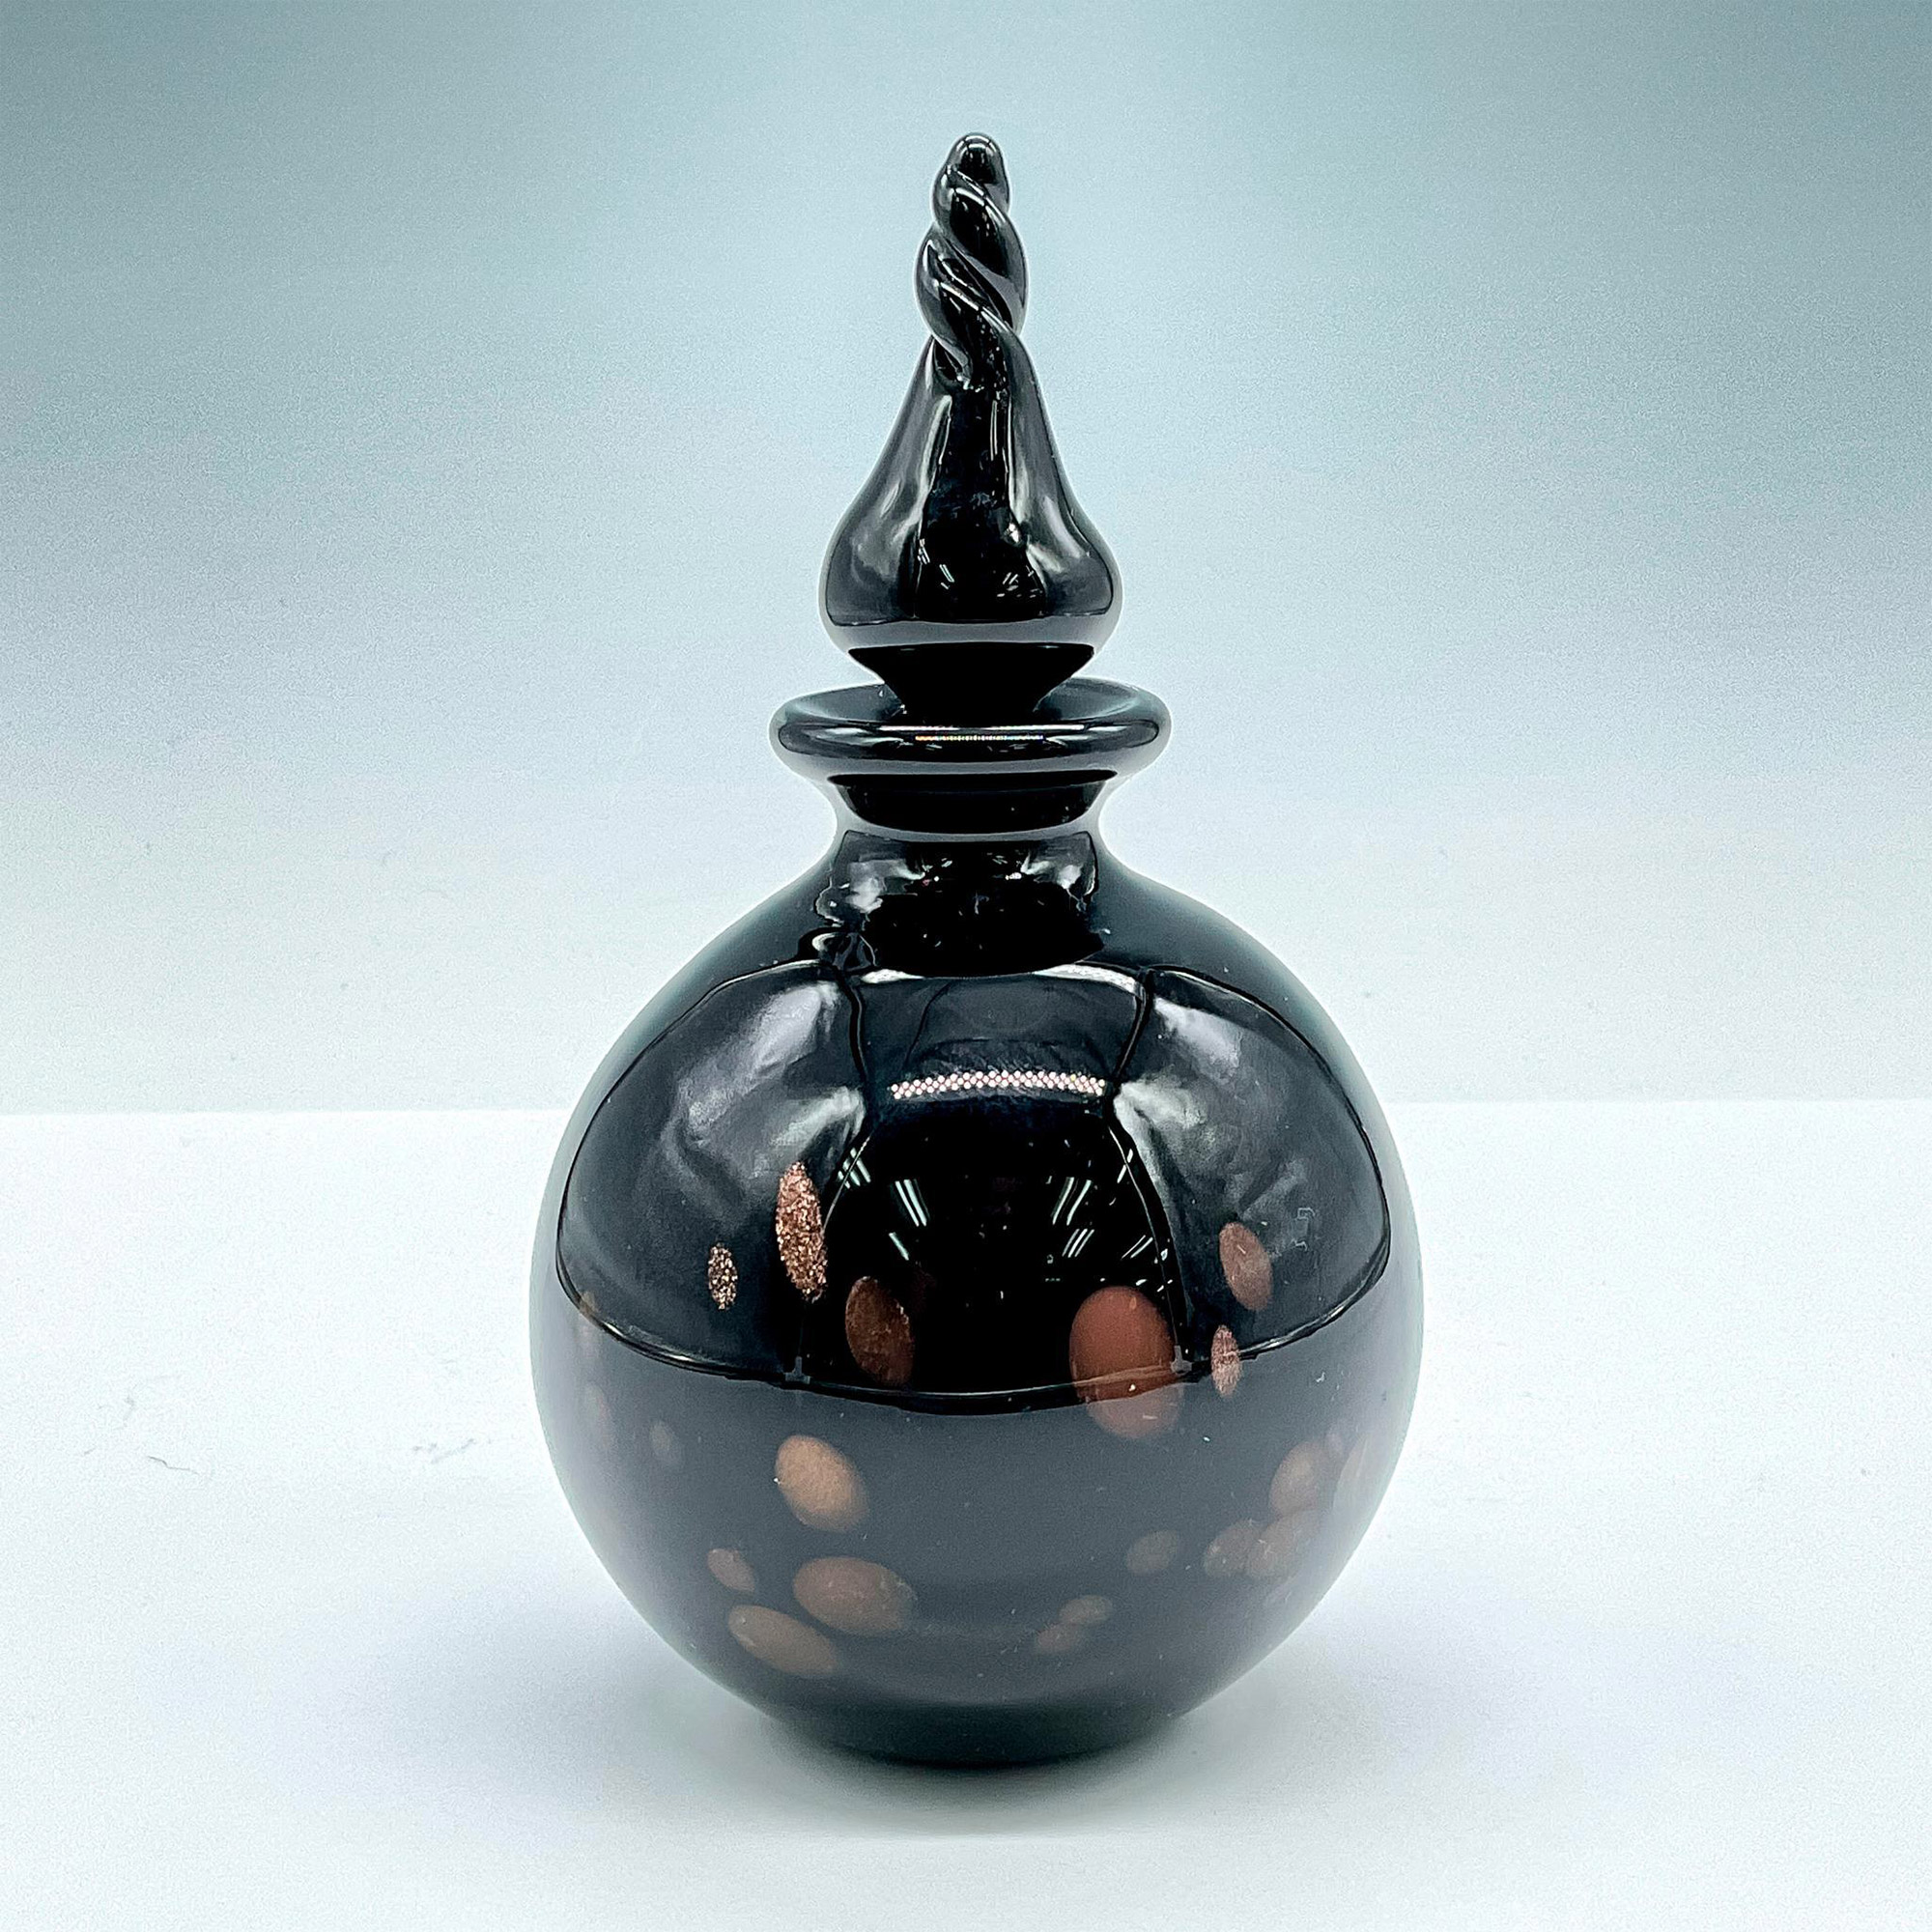 Murano Art Glass Perfume Bottle, Black and Copper